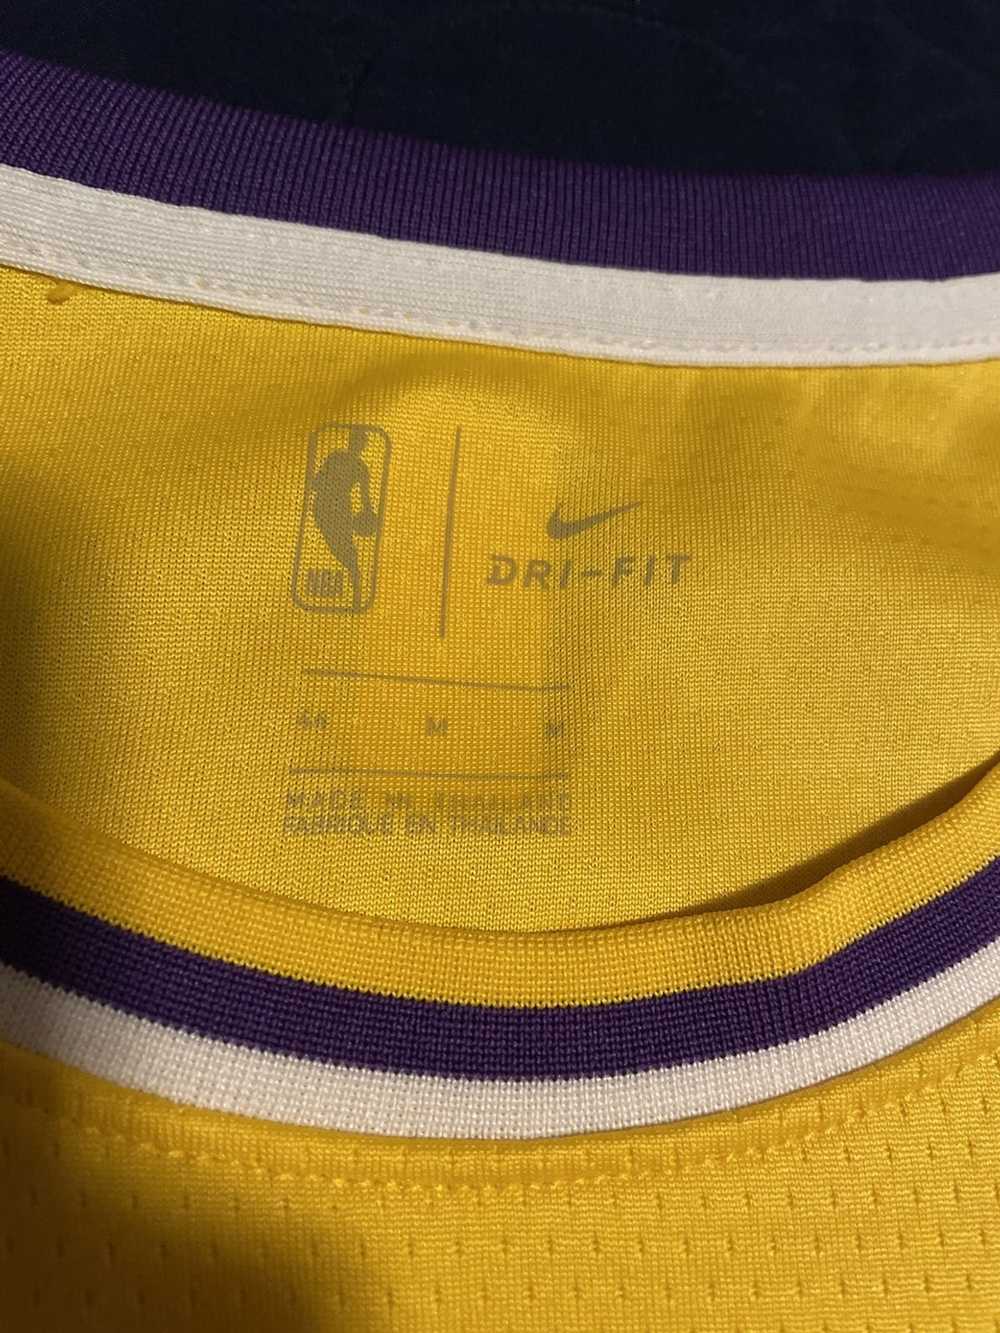 Nike Lebron James Lakers Jersey - image 5